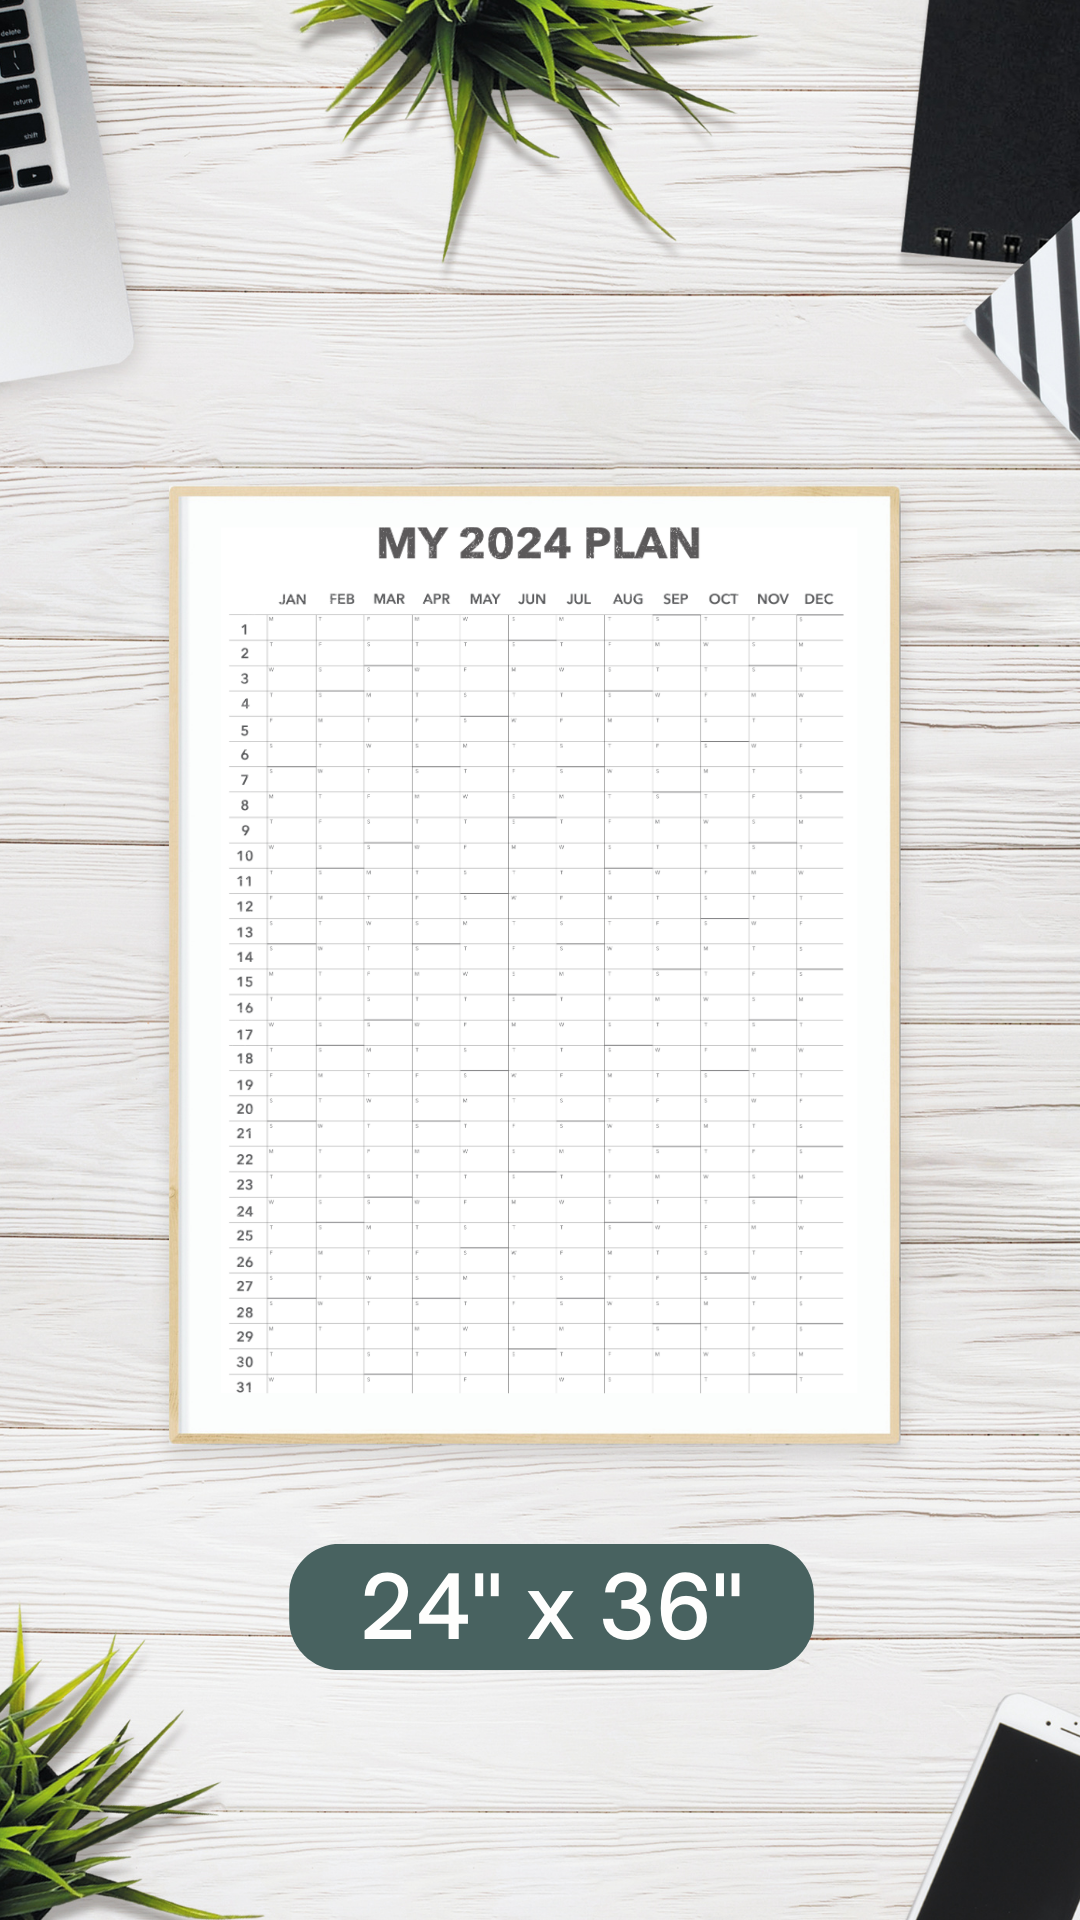 My 2024 Plan Wall Calendar - 24" x 36" - PHYSICAL COPY